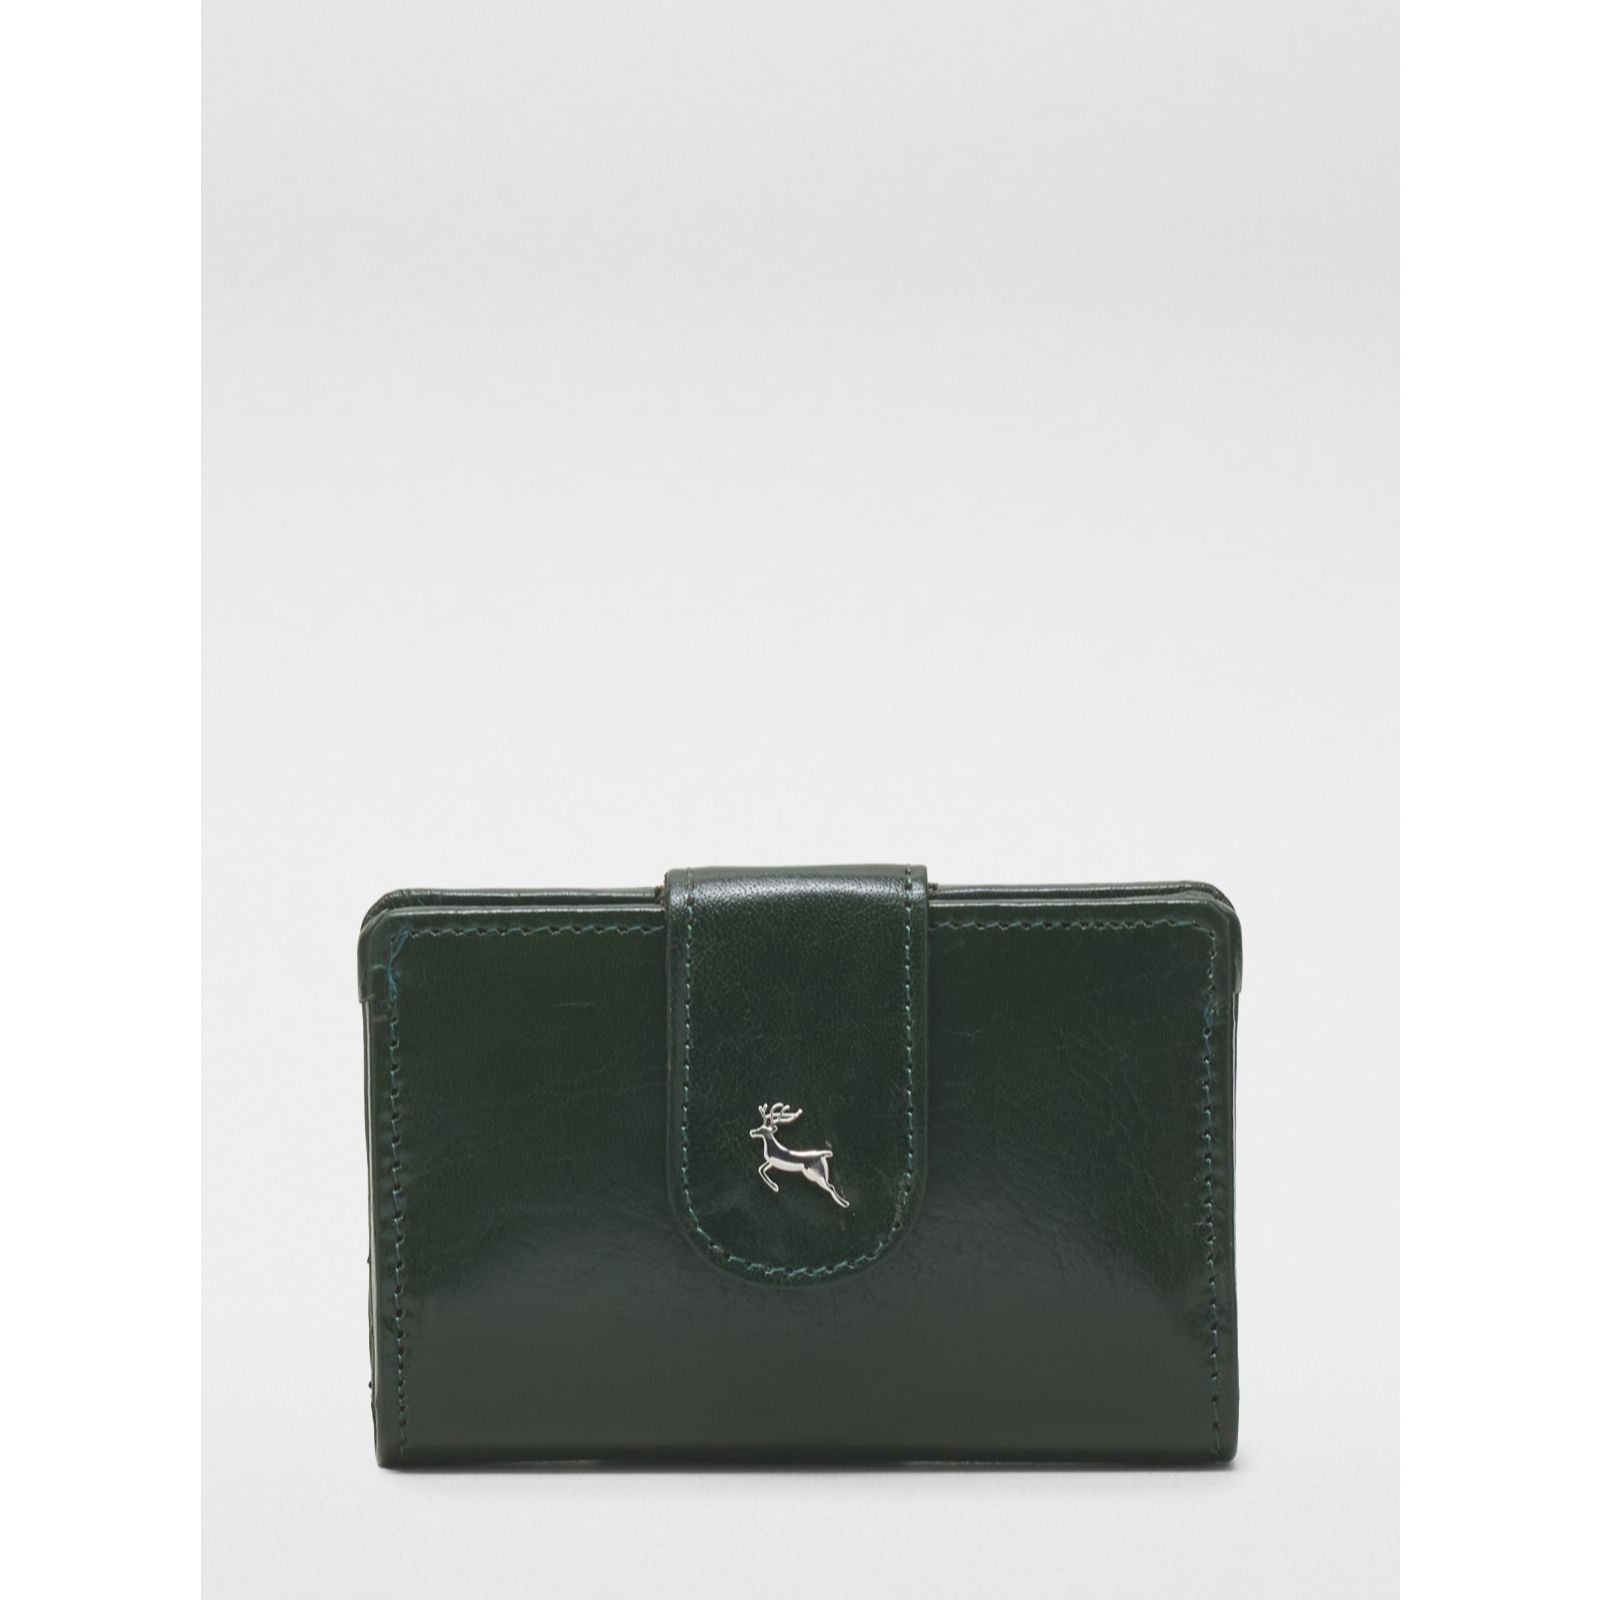 Aimee Kestenberg Zen Bifold Wallet with RFID